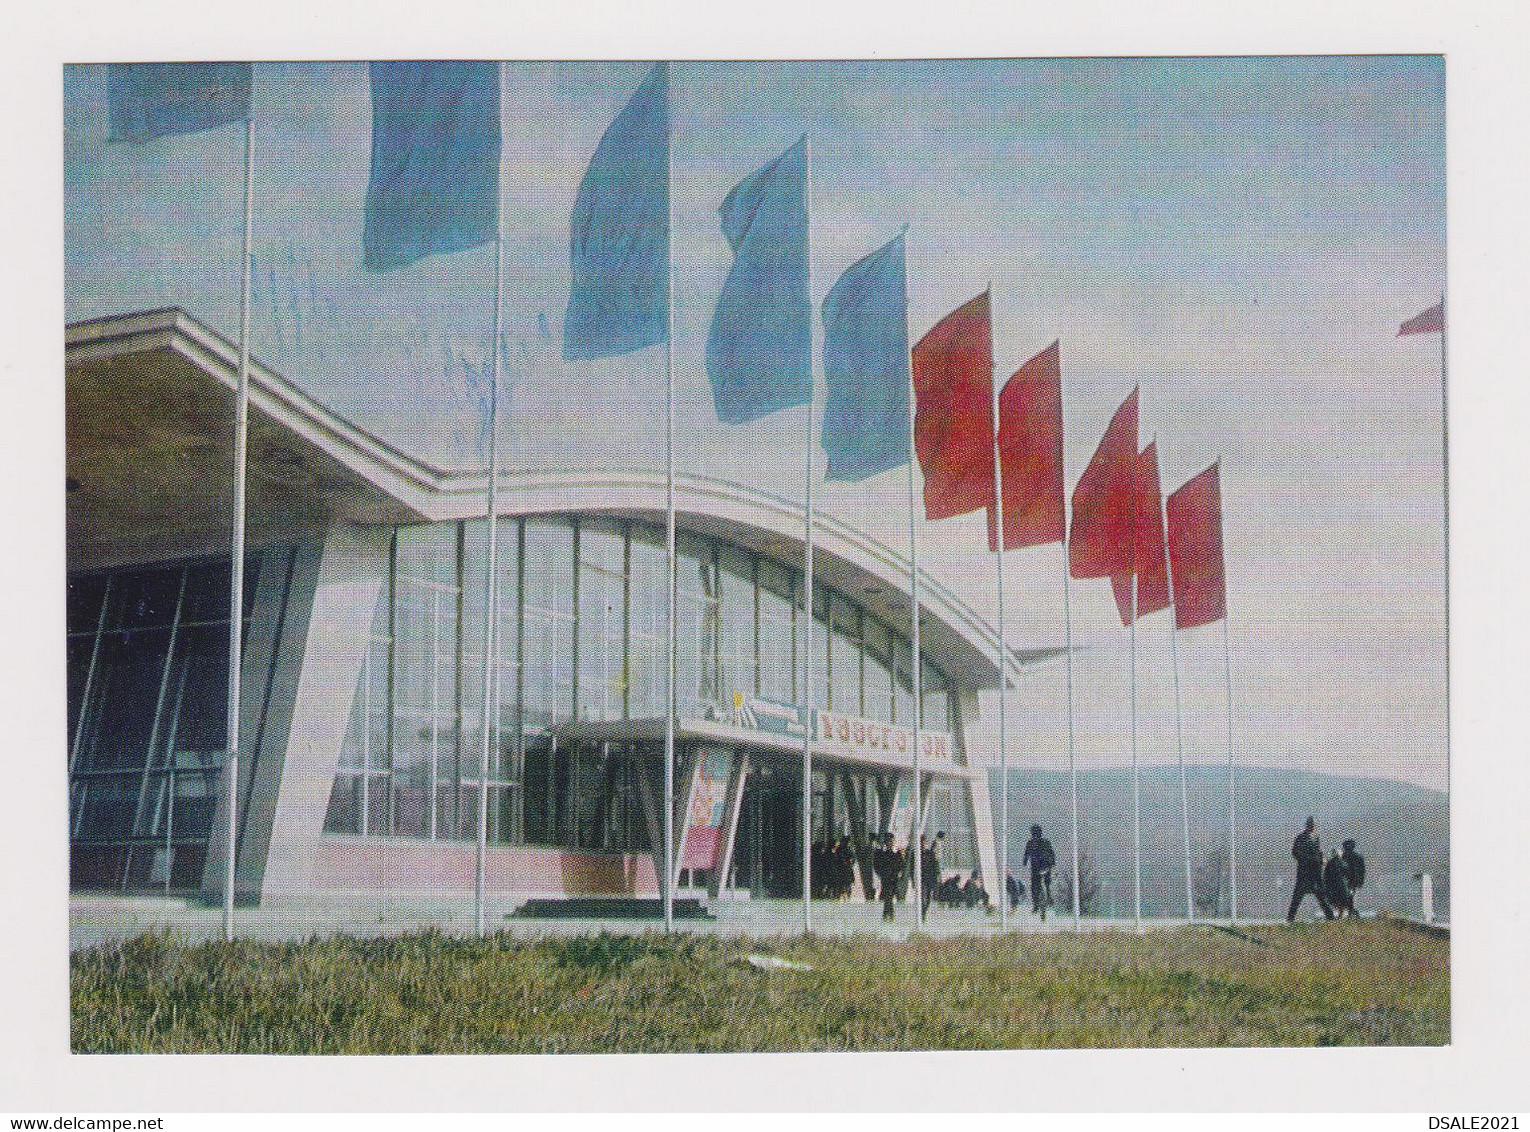 MONGOLIA Mongolie Mongolei Mongolian Capital Ulaanbaatar Exhibition Hall View 1960s Photo Postcard RPPc CPA (52607) - Mongolia